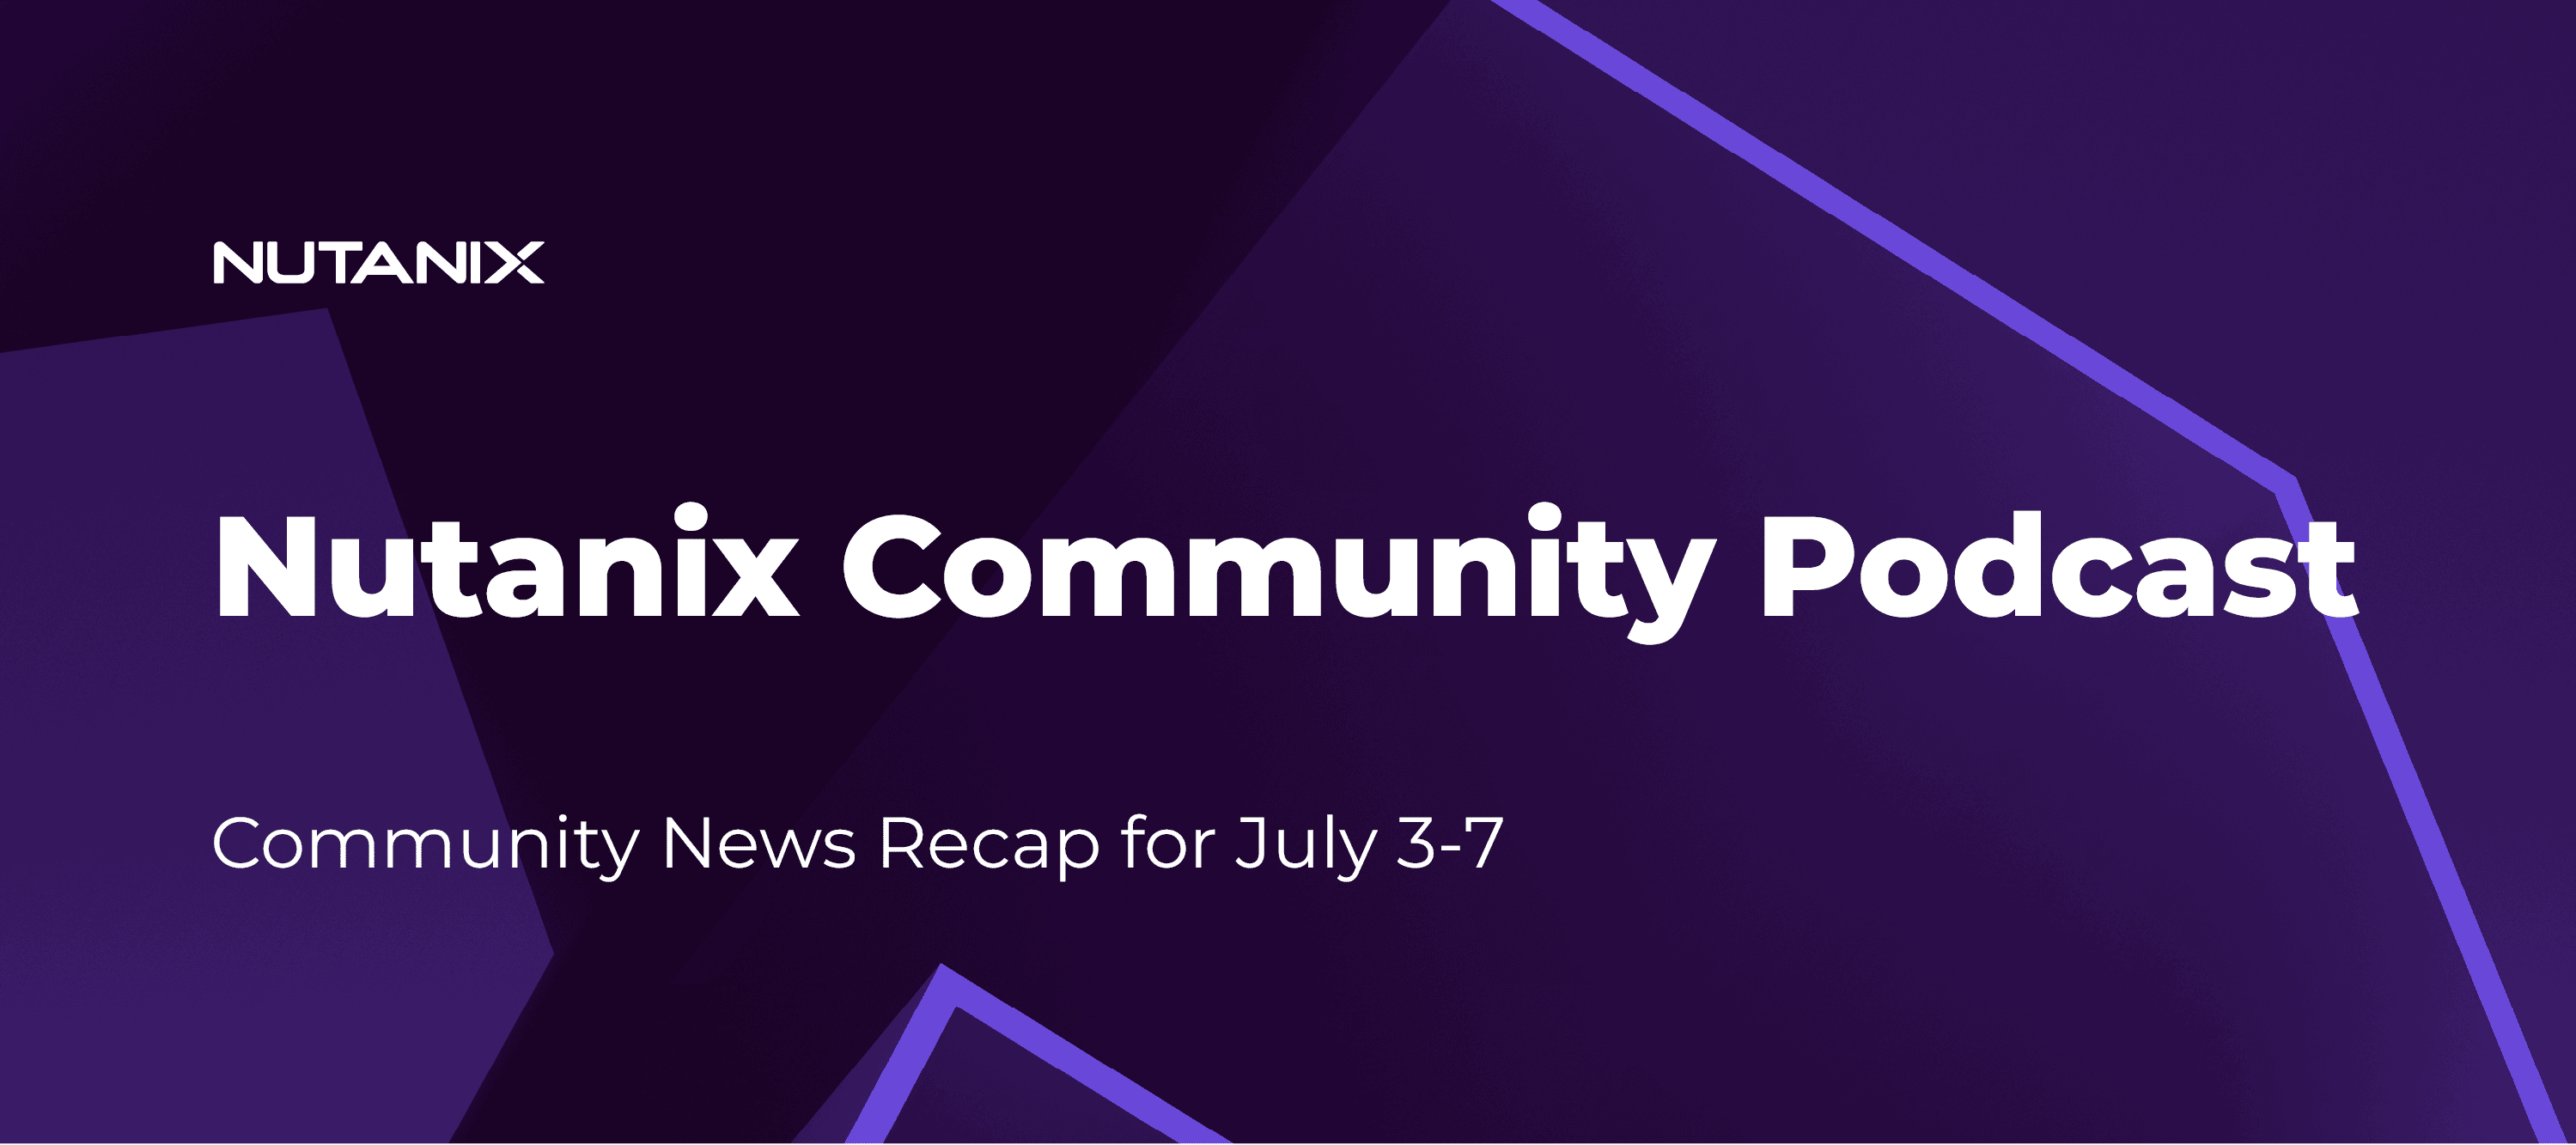 Nutanix Community Podcast: Nutanix Community News Recap July 3-7